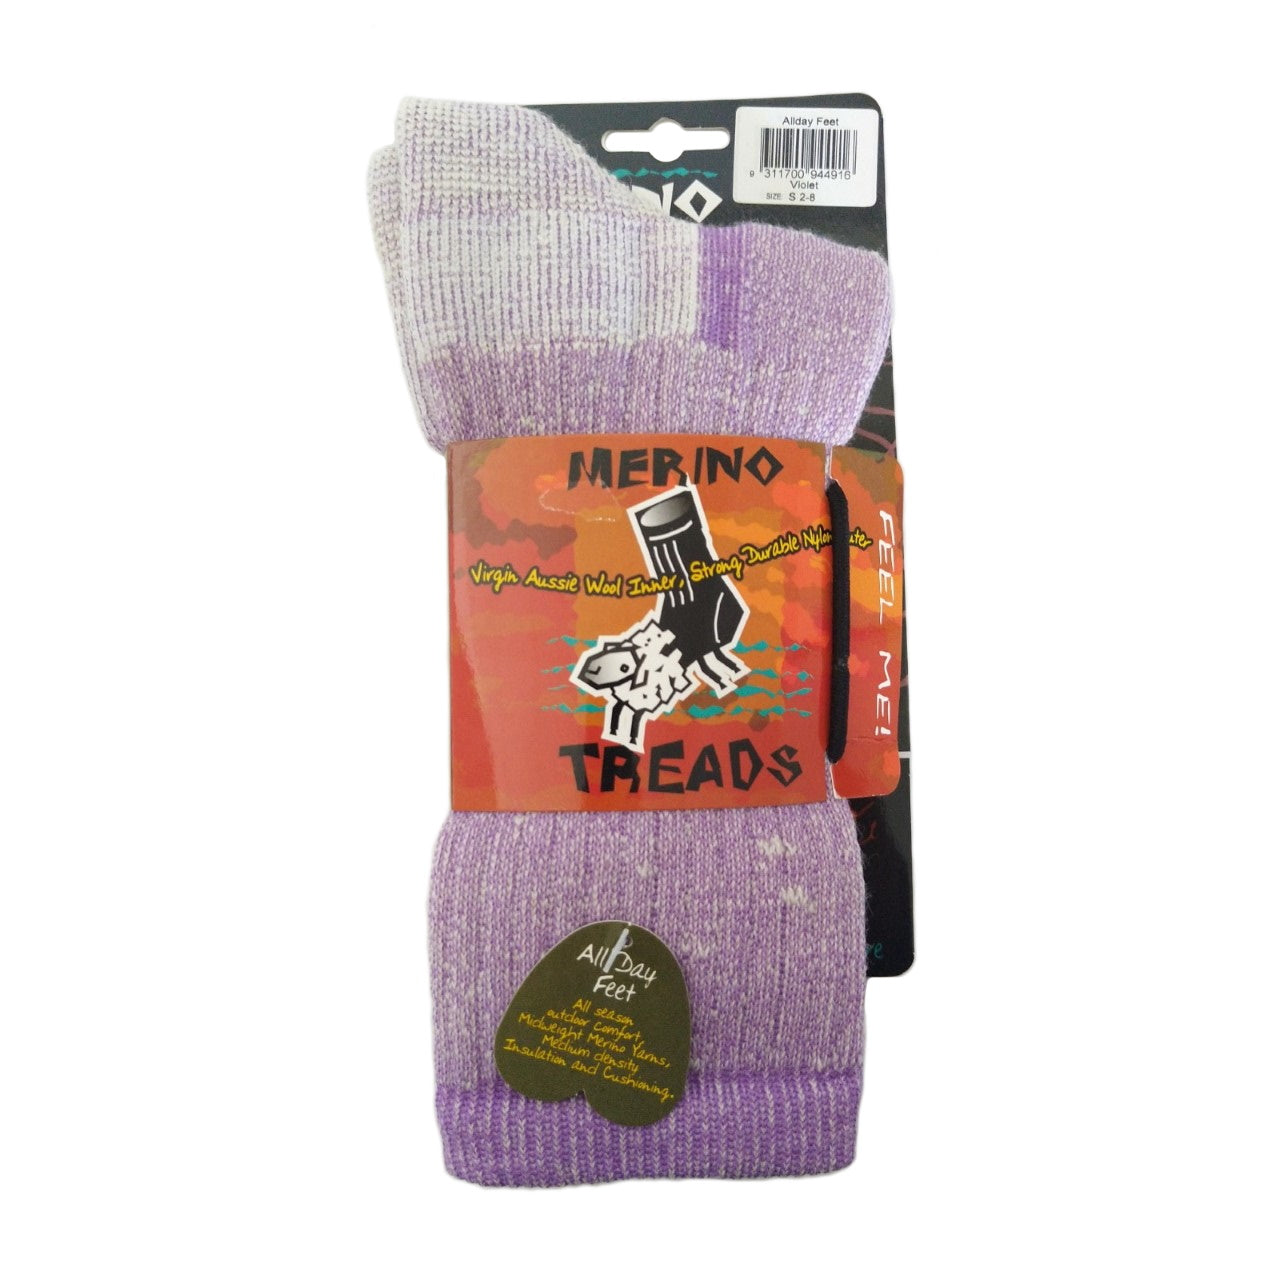 Merino Treads Allday Feet Wool Socks With White Inner in Violet